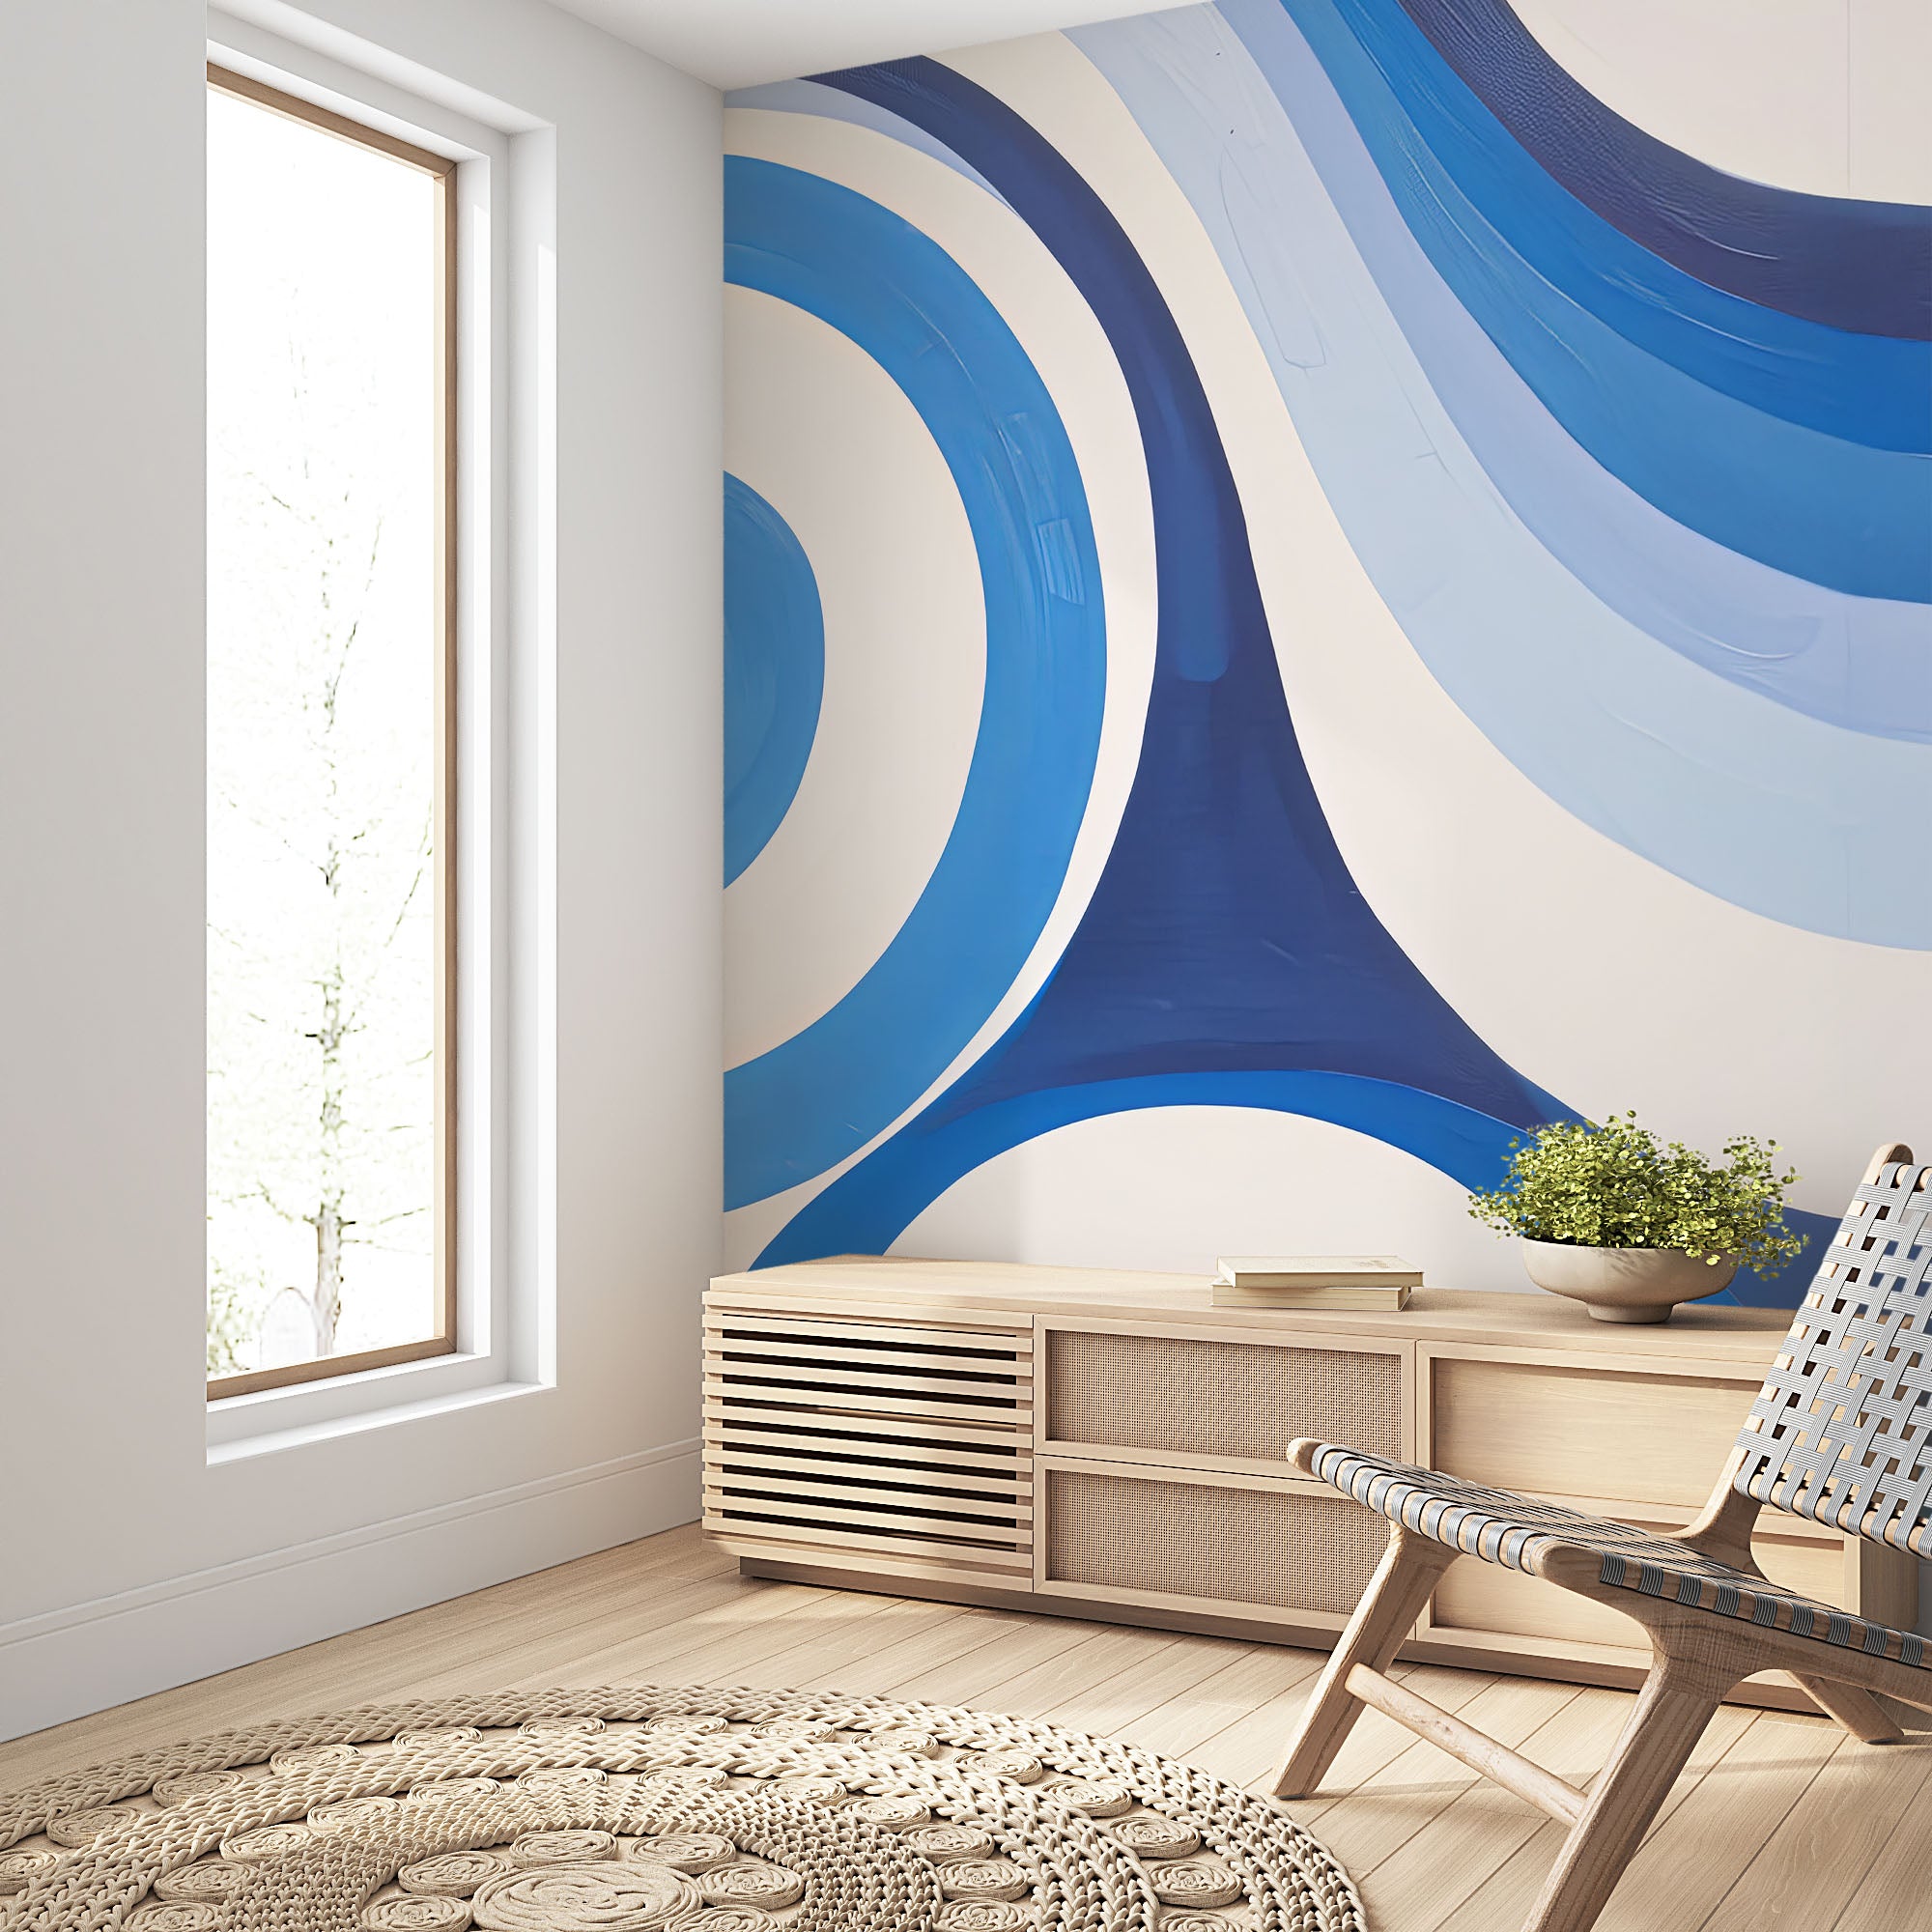 Azure Swirls: Harmony in Blue and White